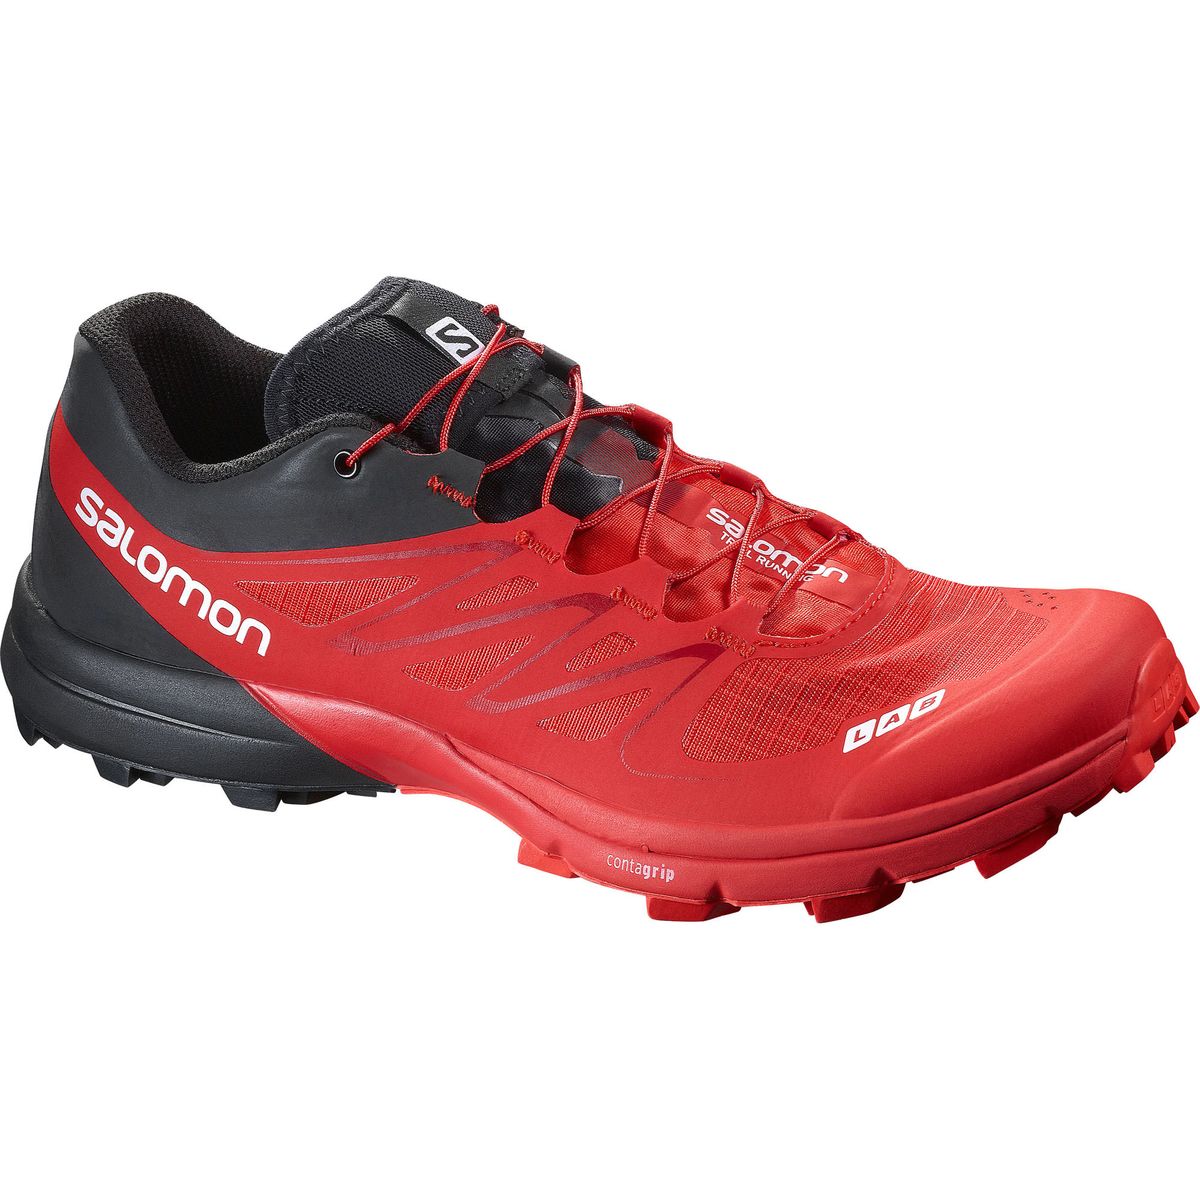 Salomon S Lab Sense 5 Ultra SG Trail Running Shoe Men's